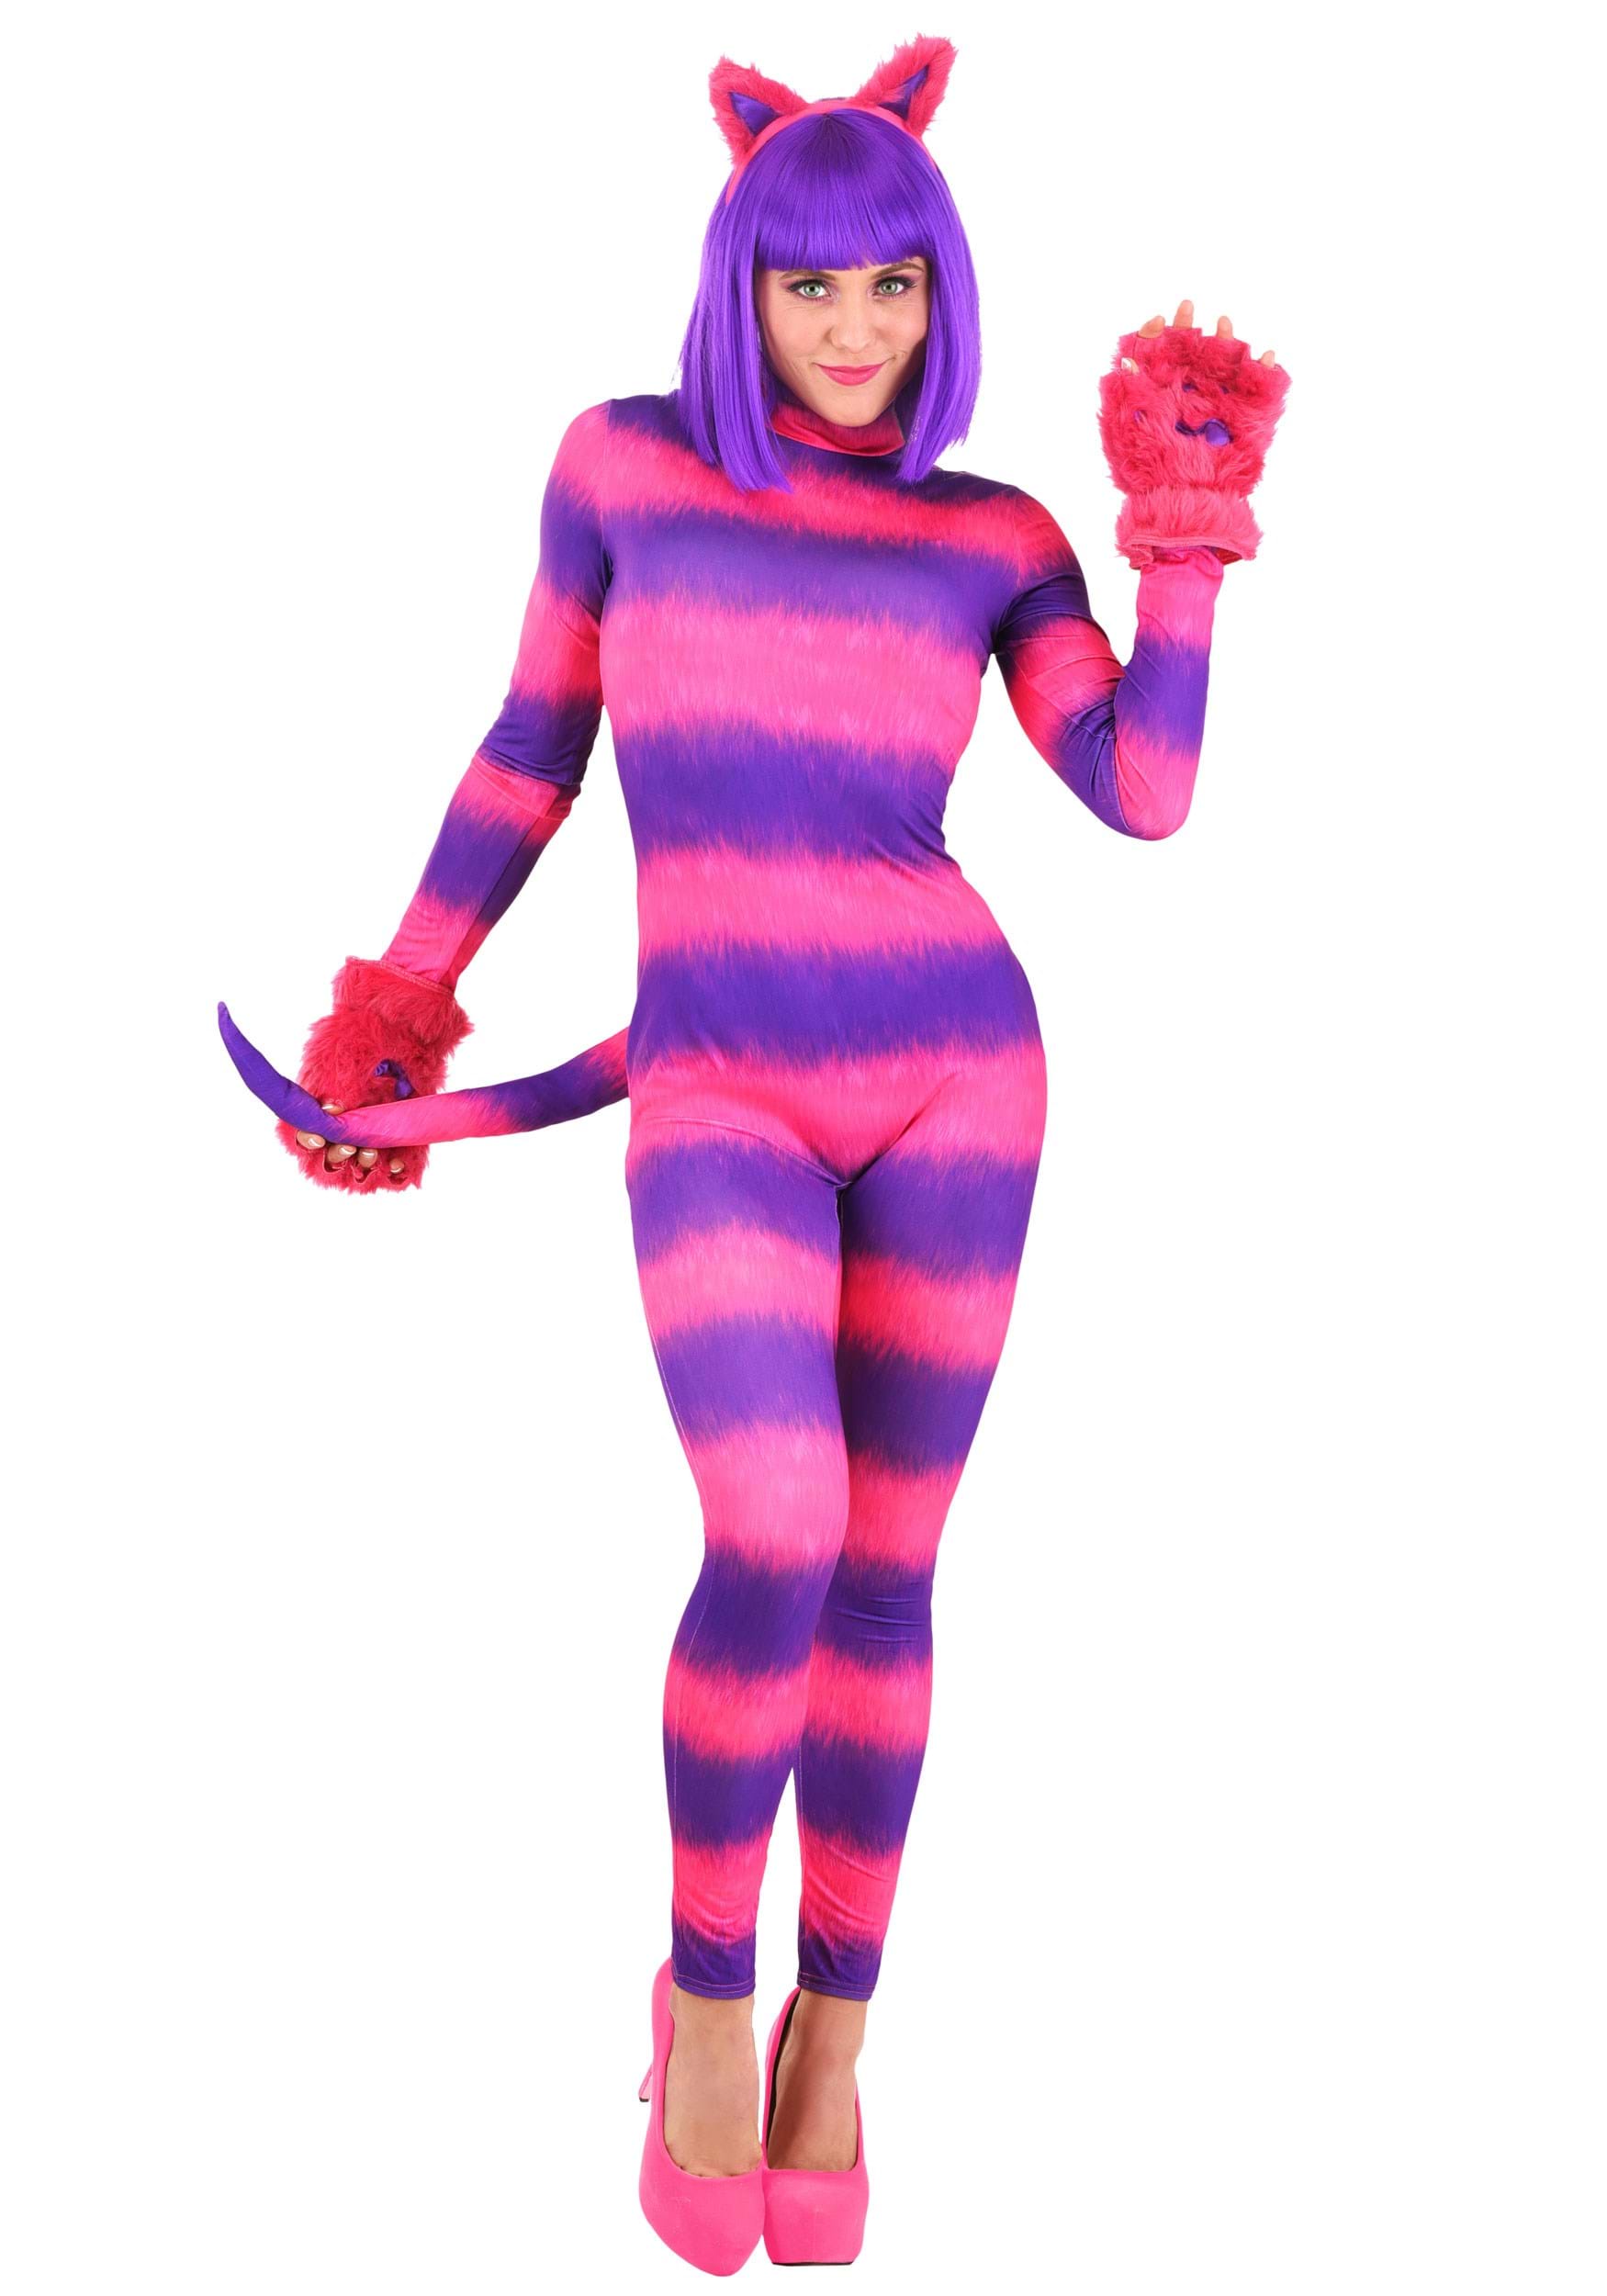 Photos - Fancy Dress CATerpillar FUN Costumes Sexy Cheshire Cat Women's Bodysuit Pink/Purple FUN0903AD 